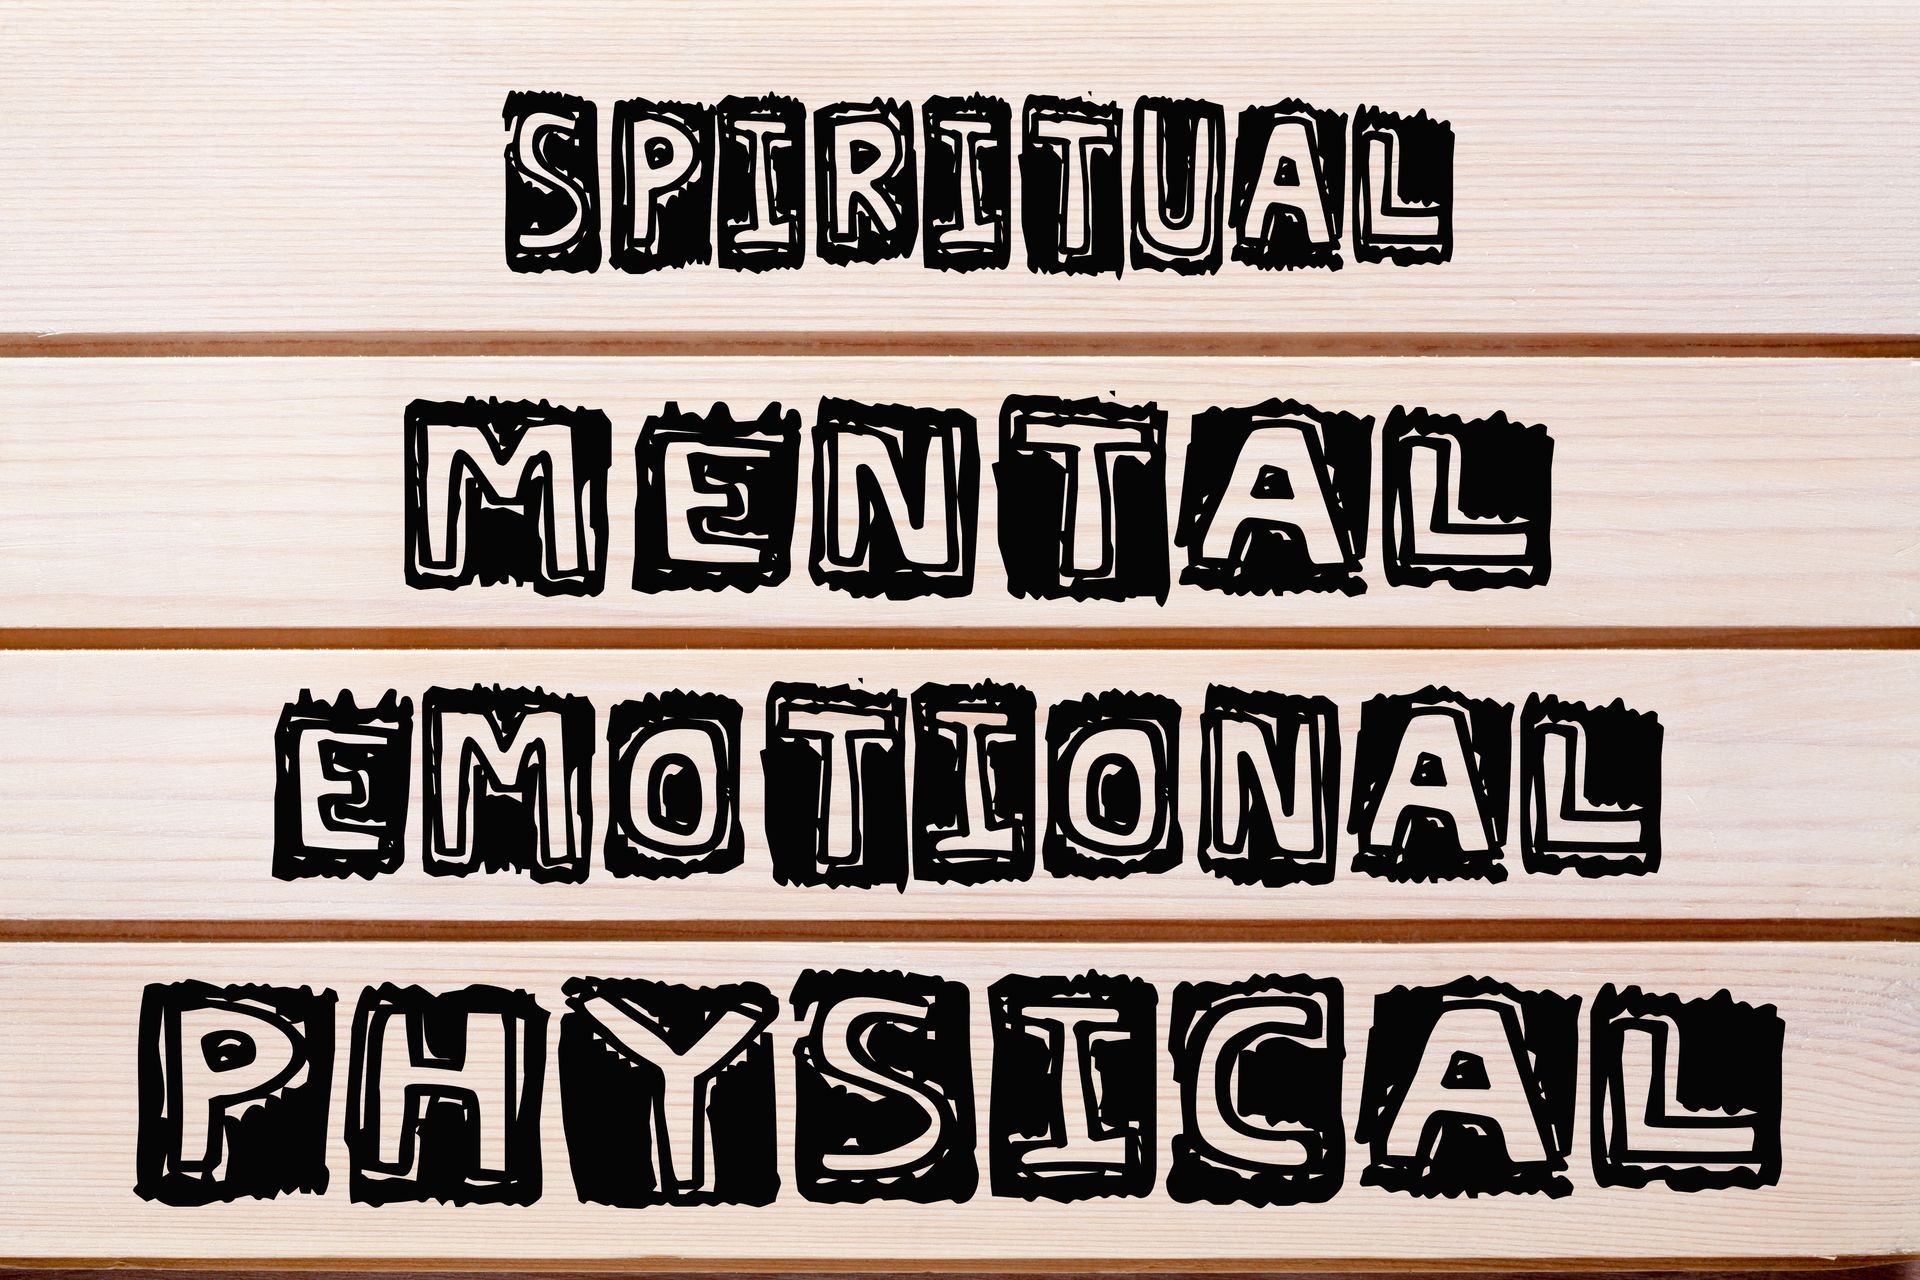 Mental spiritual emotional physical written on wood wall decor.